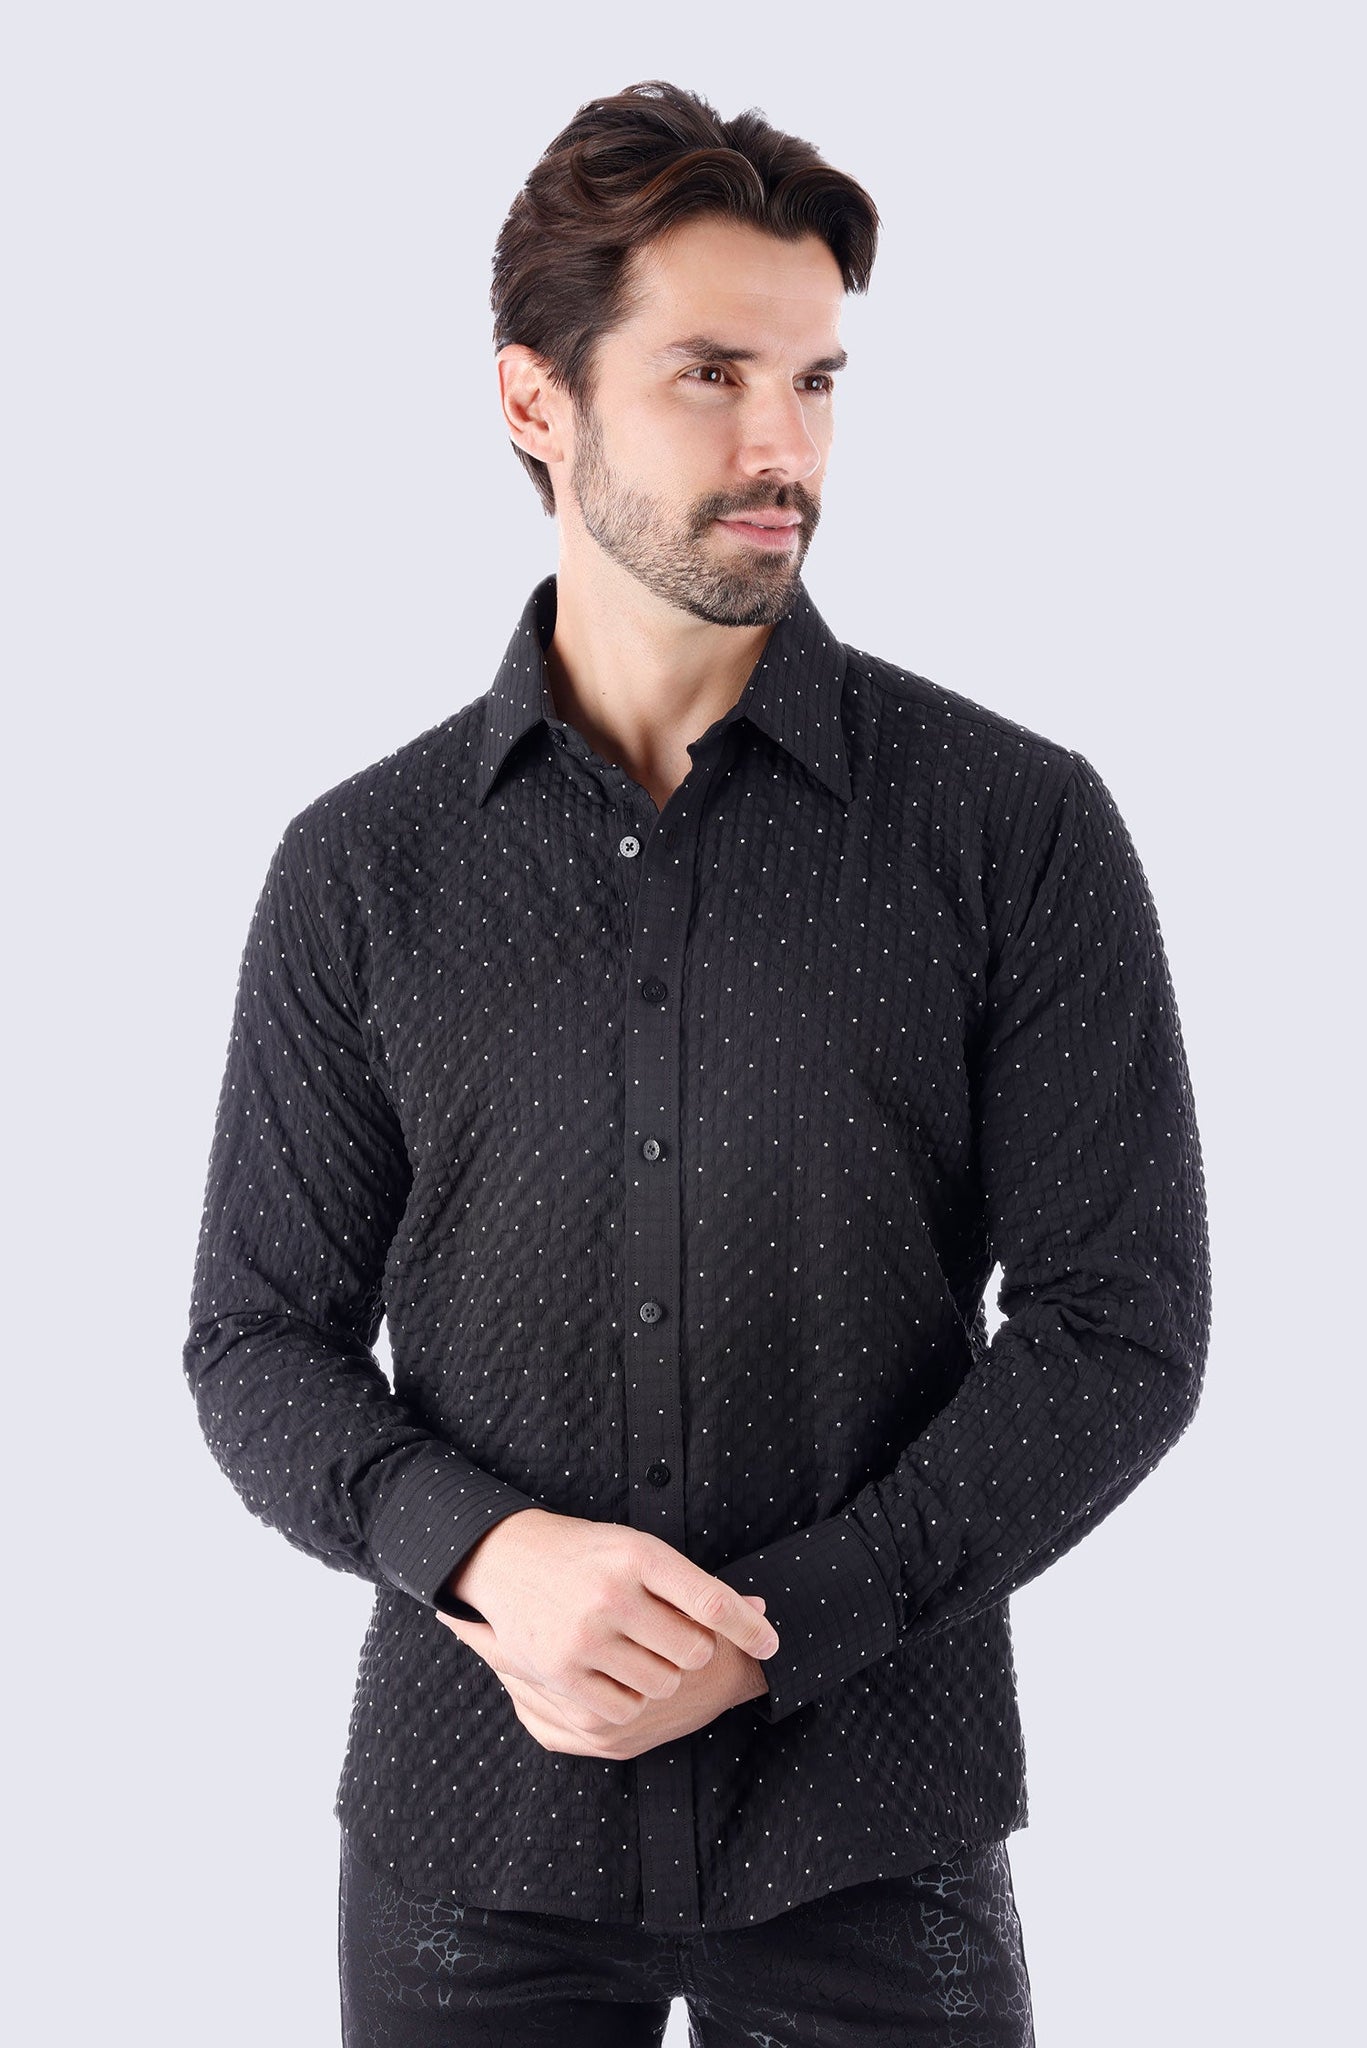 Barabas Wholesale Men's Rhinestones Button Down Long Sleeve Shirts 4BR58 Black